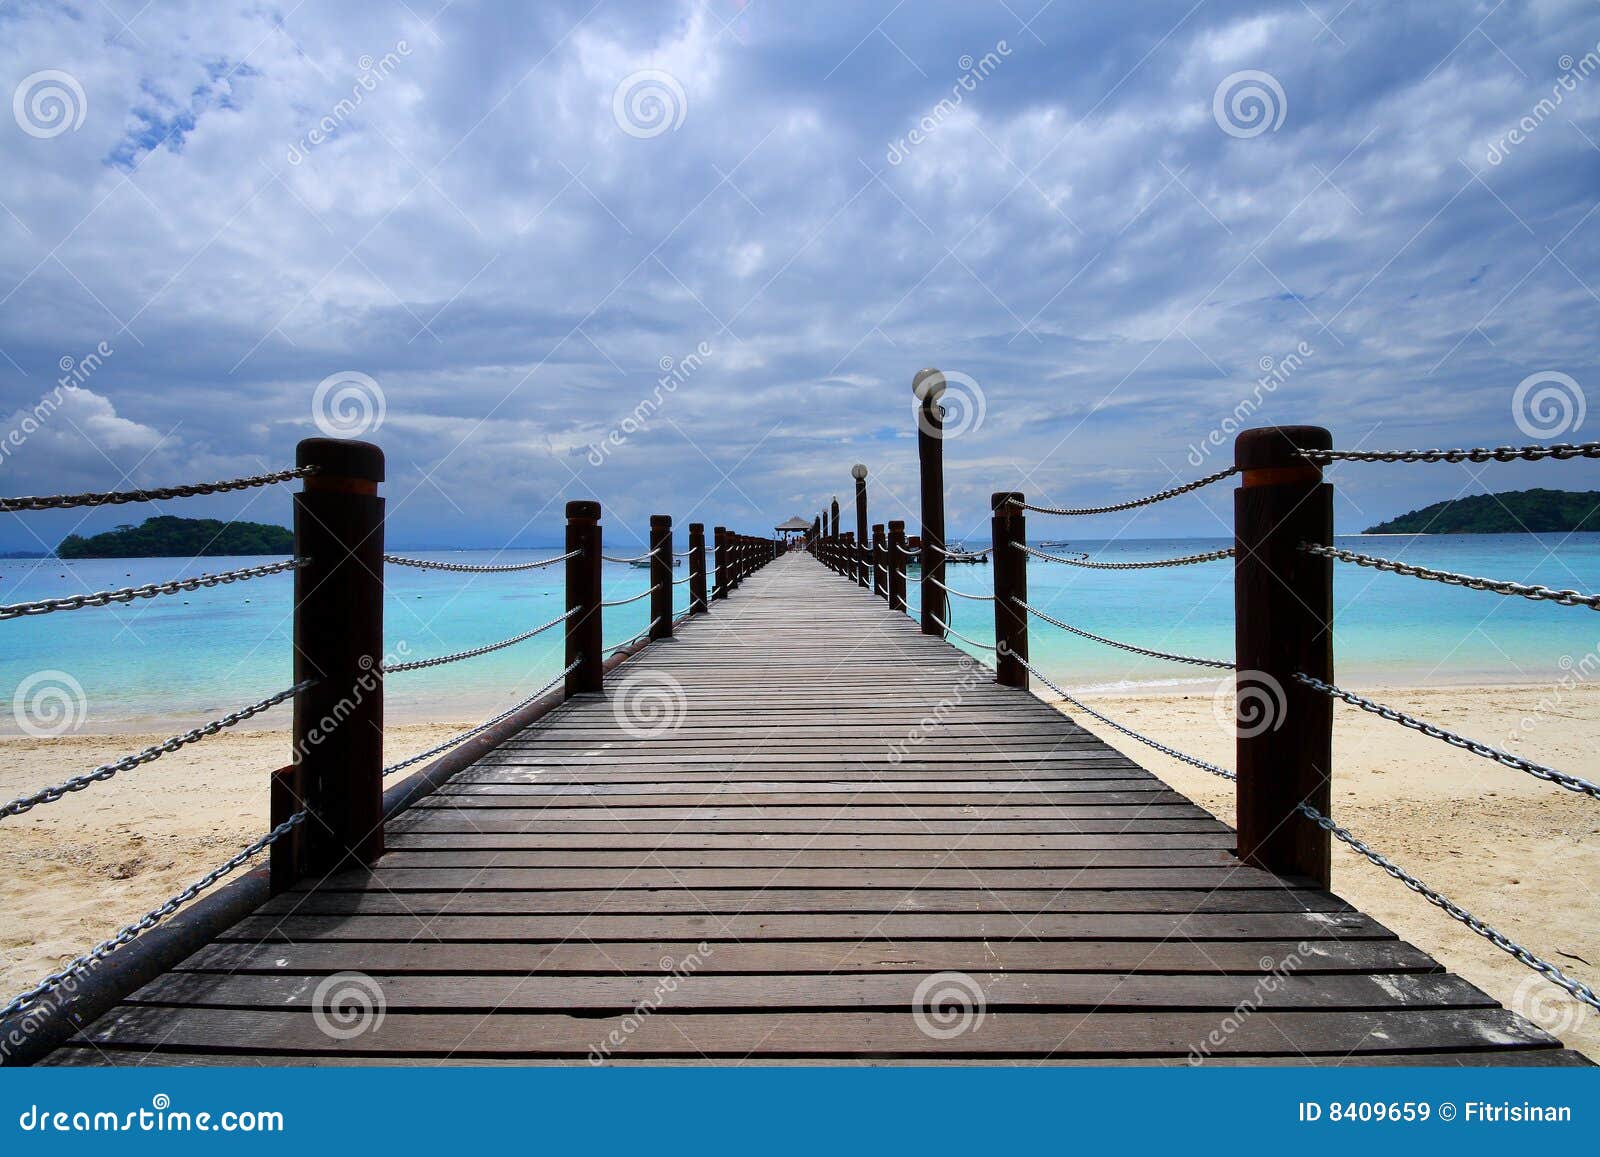 footbridge and ocean